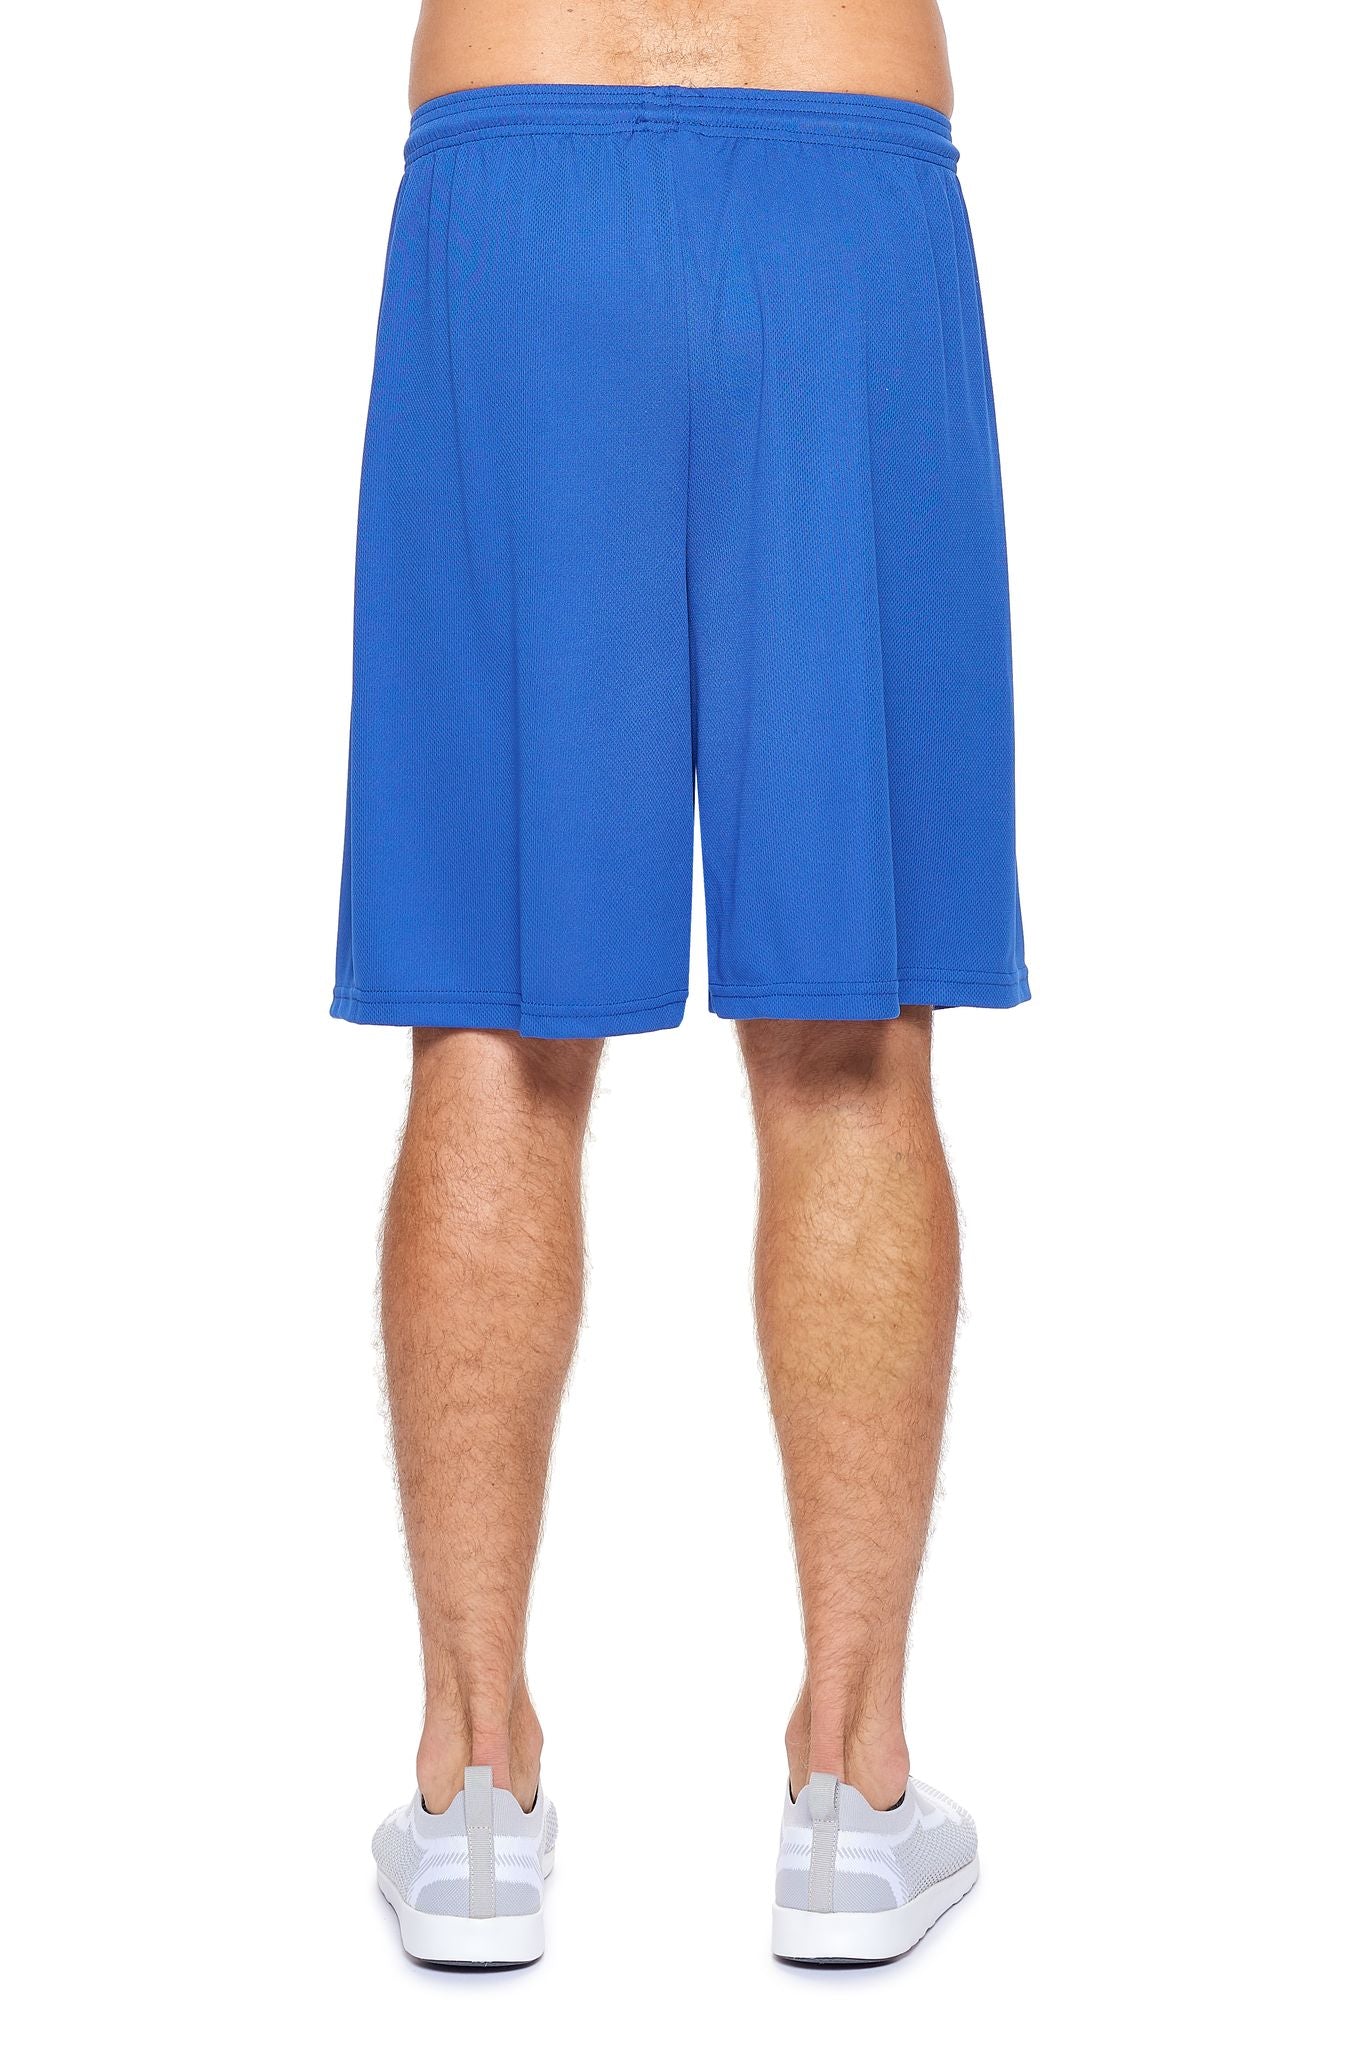 AJ1089🇺🇸 Oxymesh™ Training Shorts - Expert Brand #ROYAL BLUE